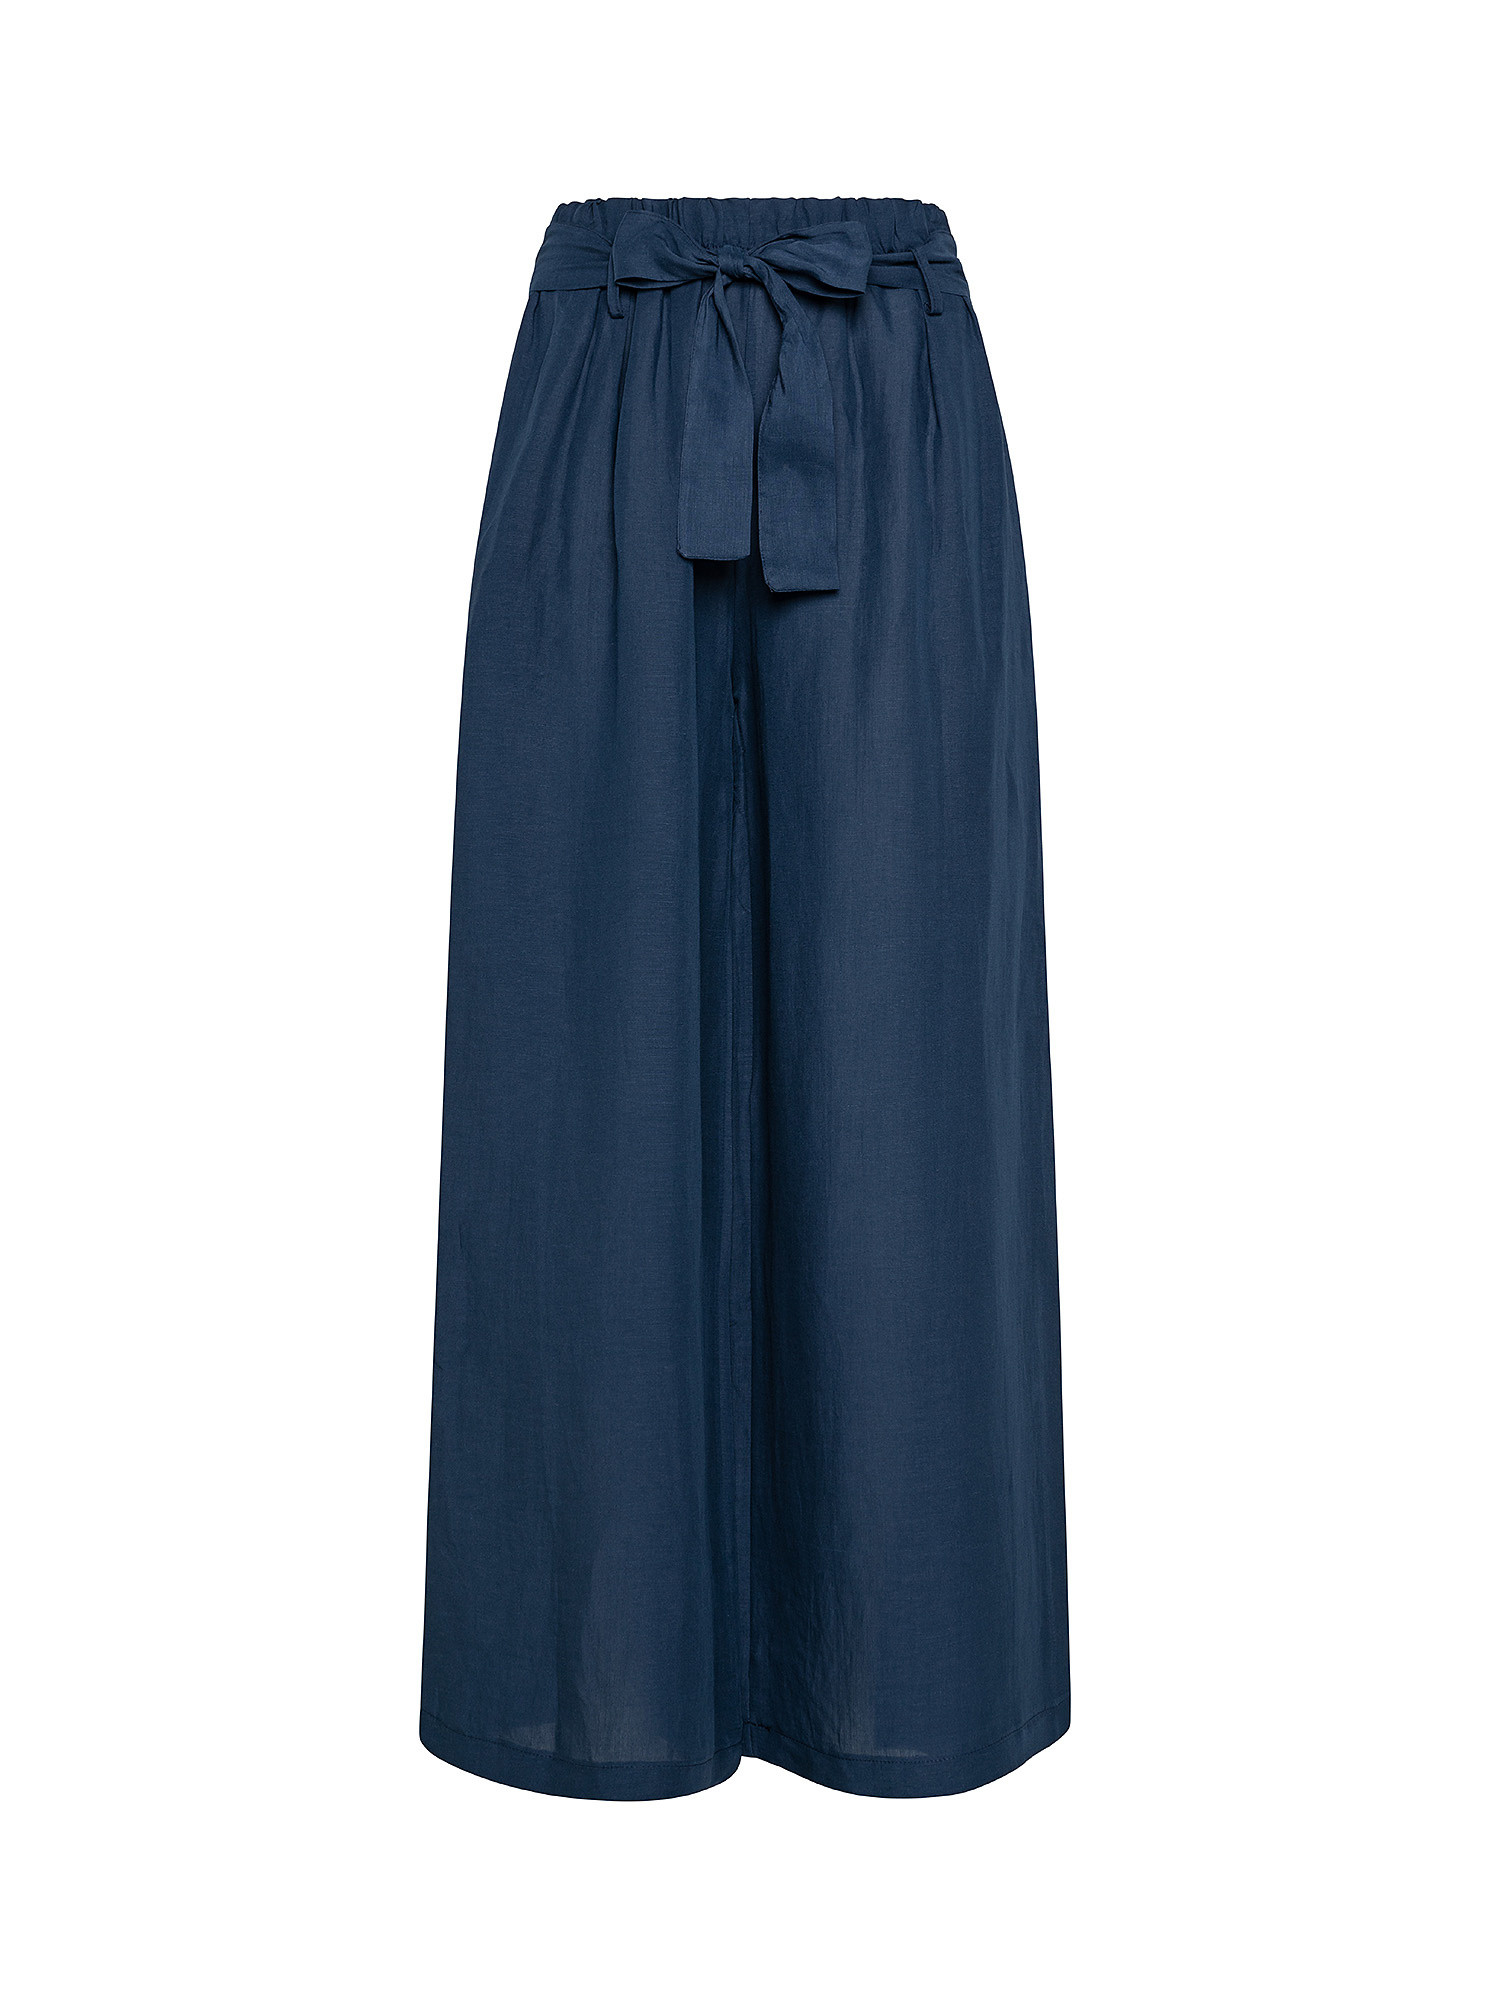 Trouser skirt, Denim, large image number 0